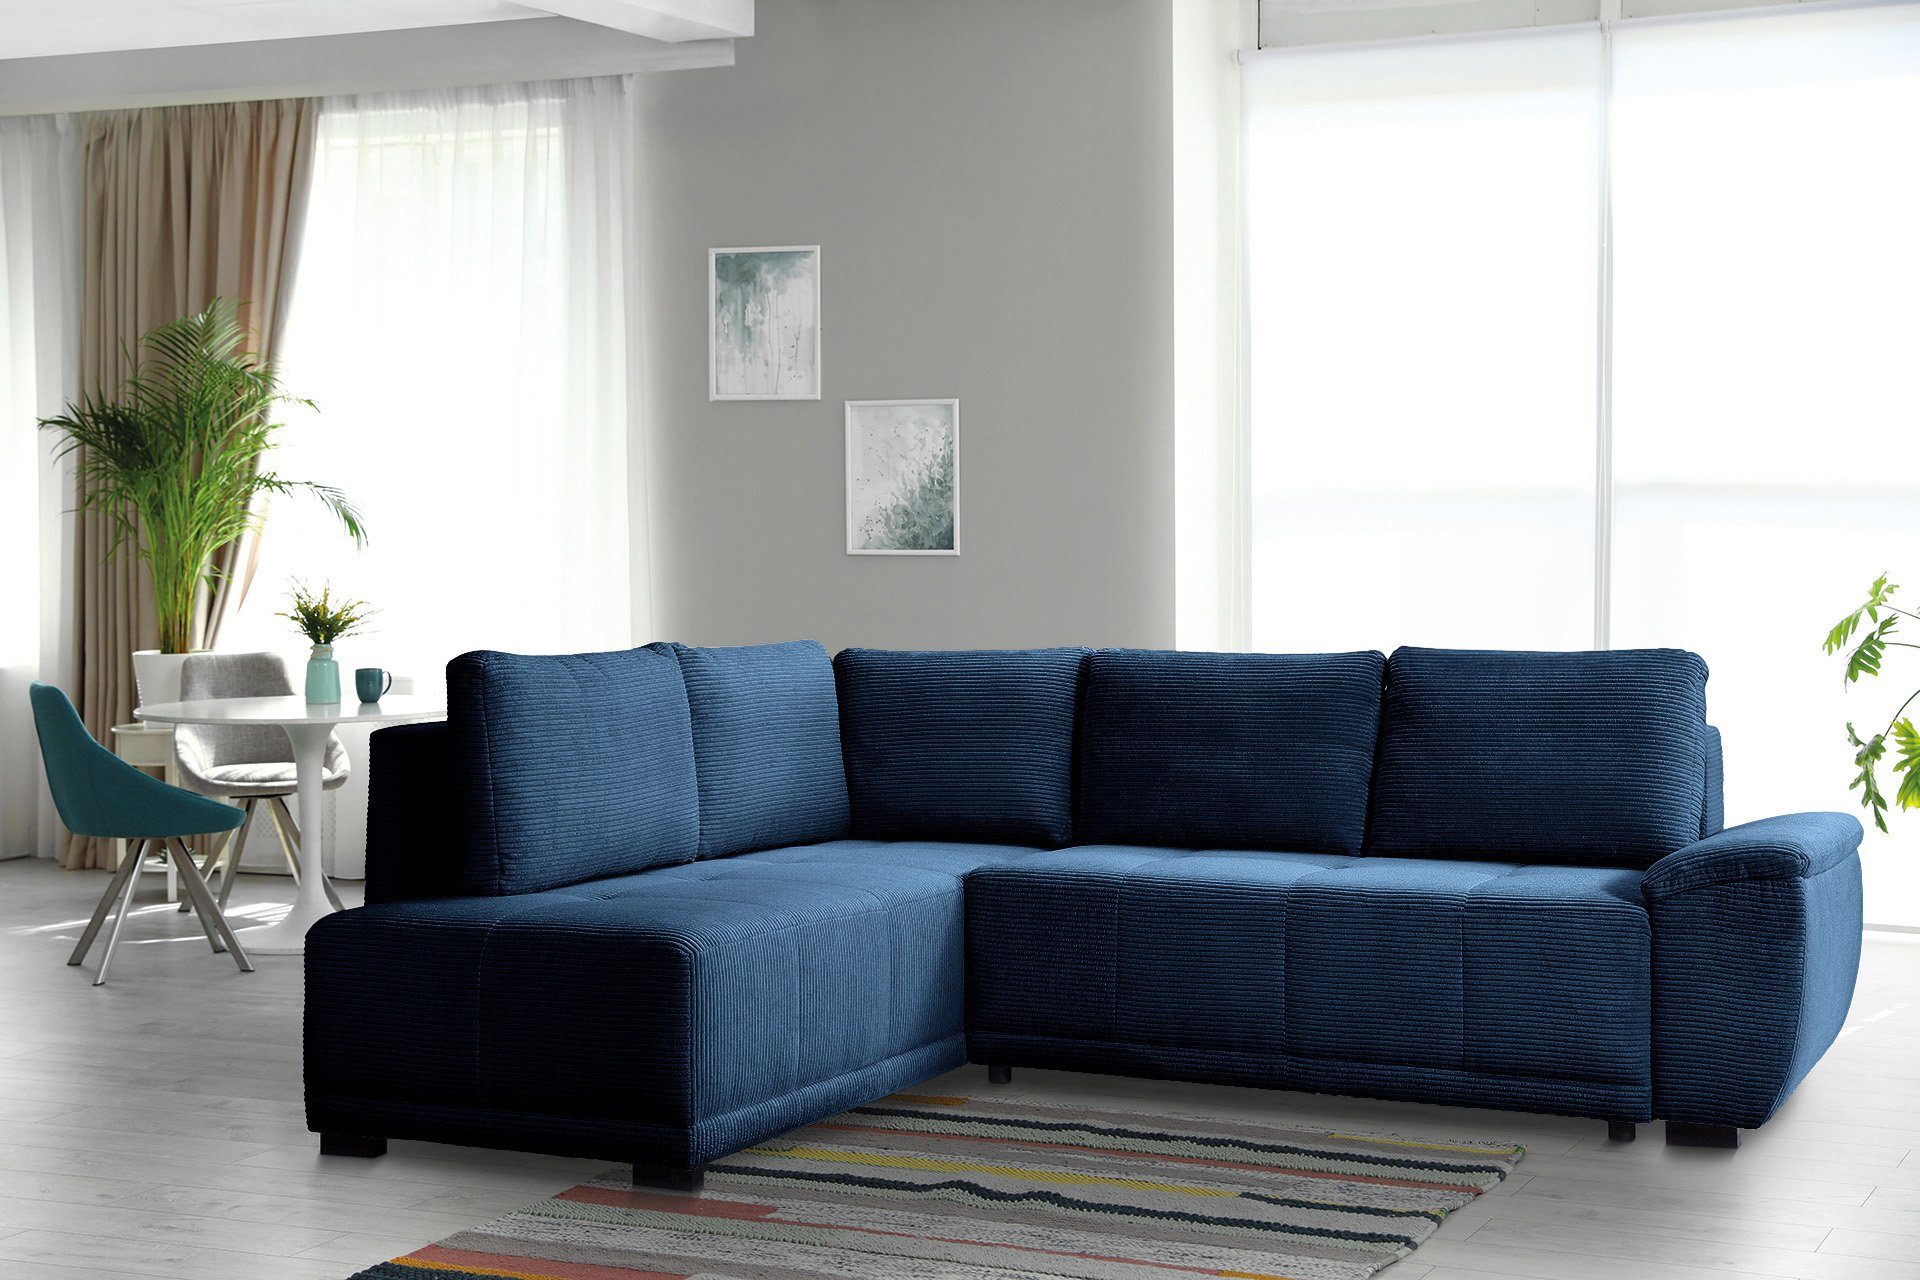 exxpo - sofa 5 Schlaffunktion Rückenkissen & fashion Ecksofa, inkl. mane Bettkasten, beidseitig